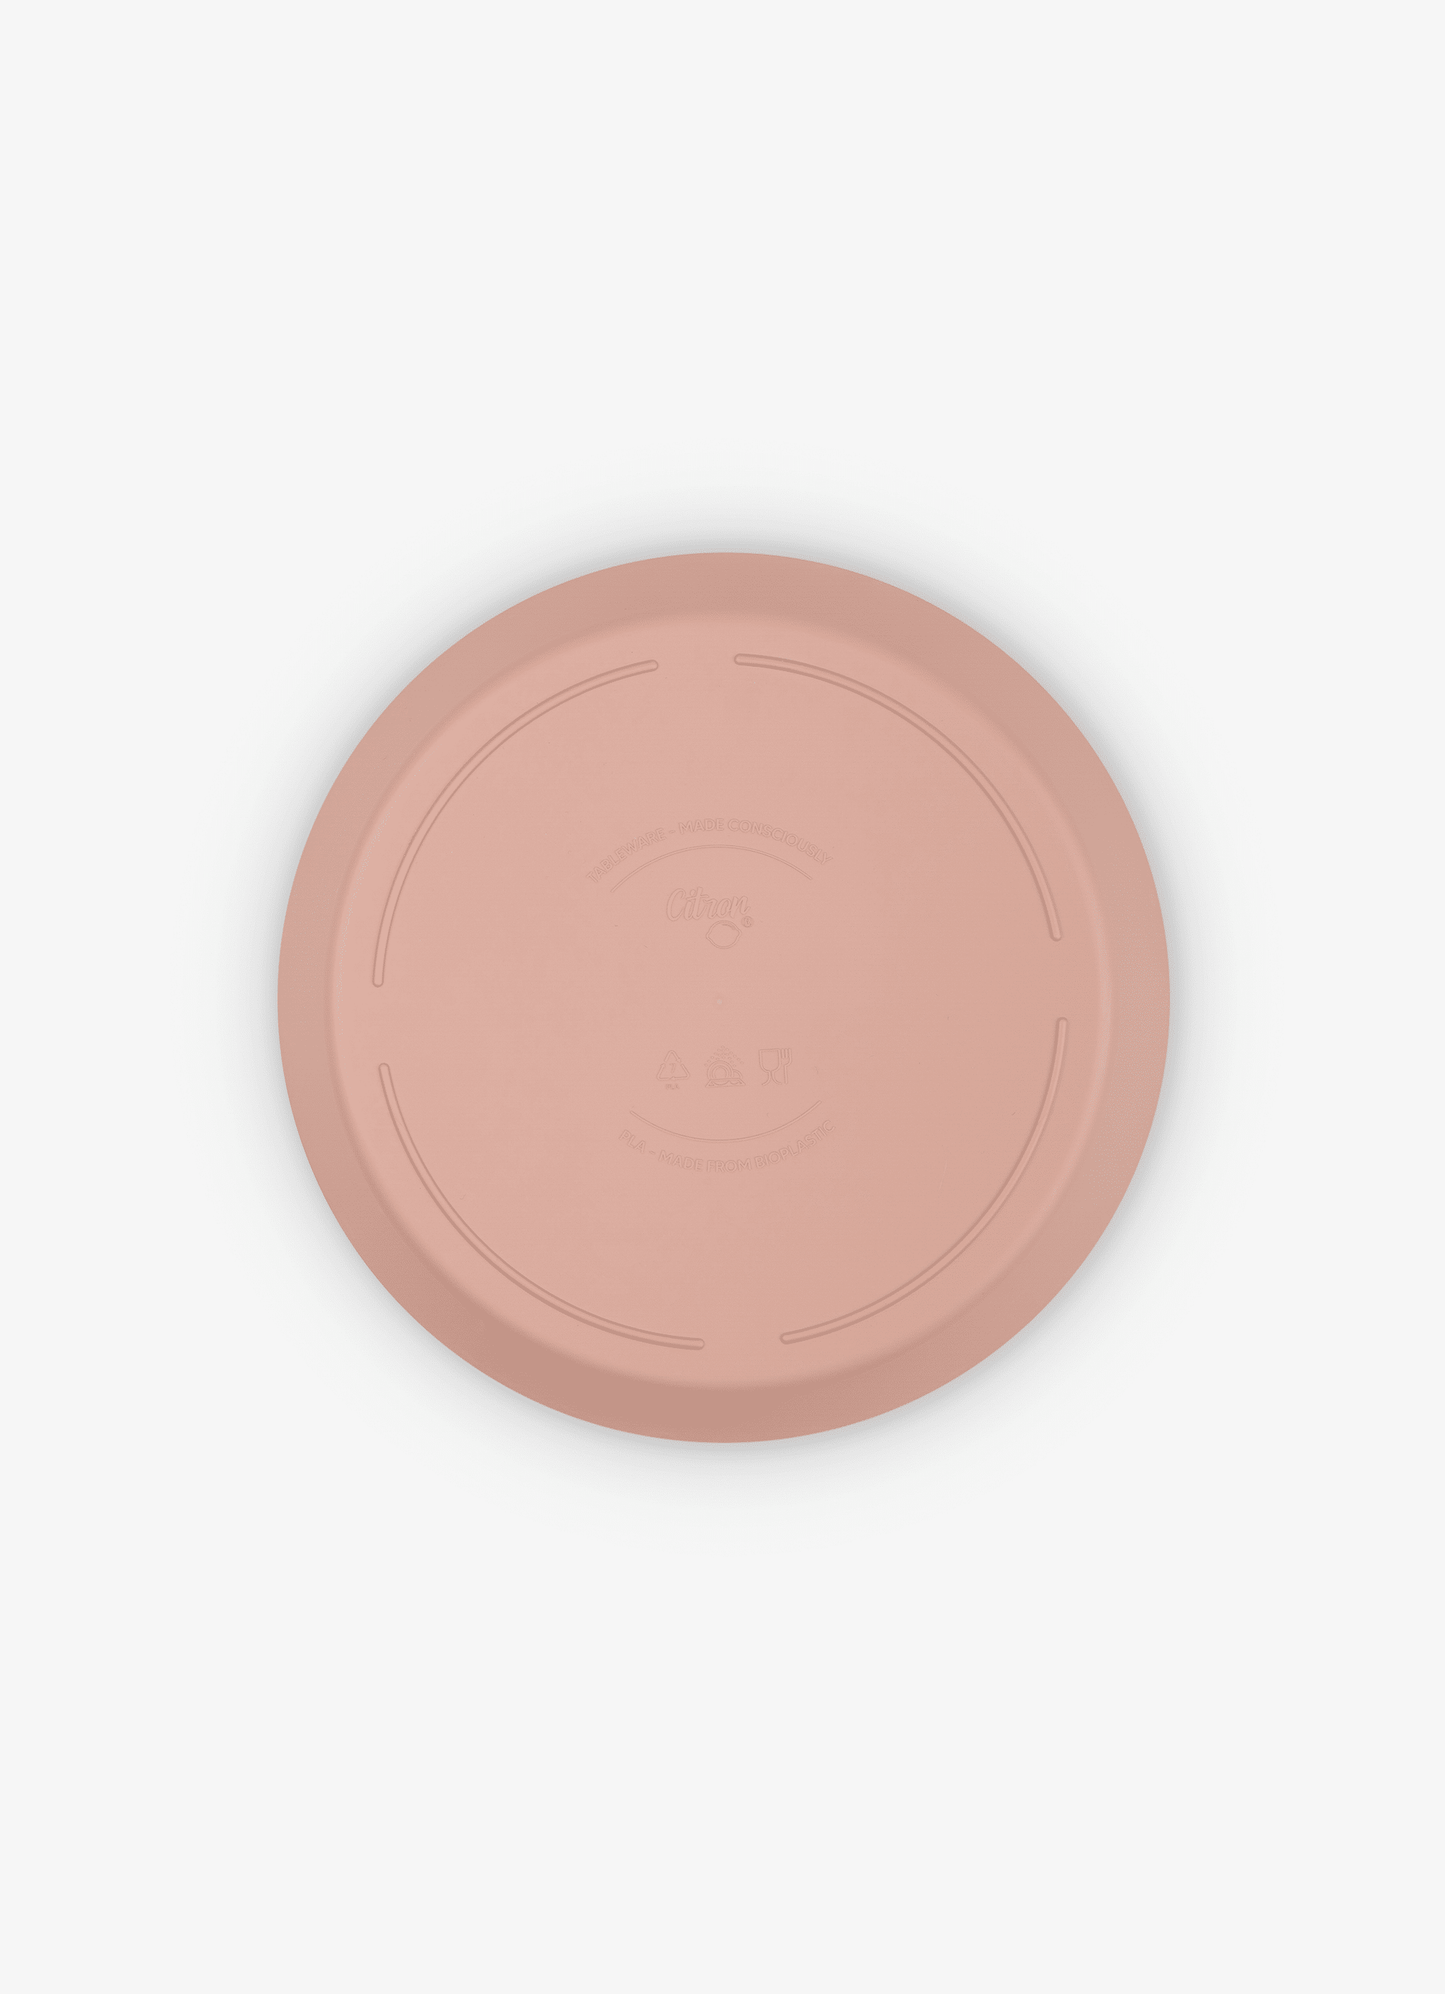 Bio Based Plates - Set of 4 - Pink/ Cream